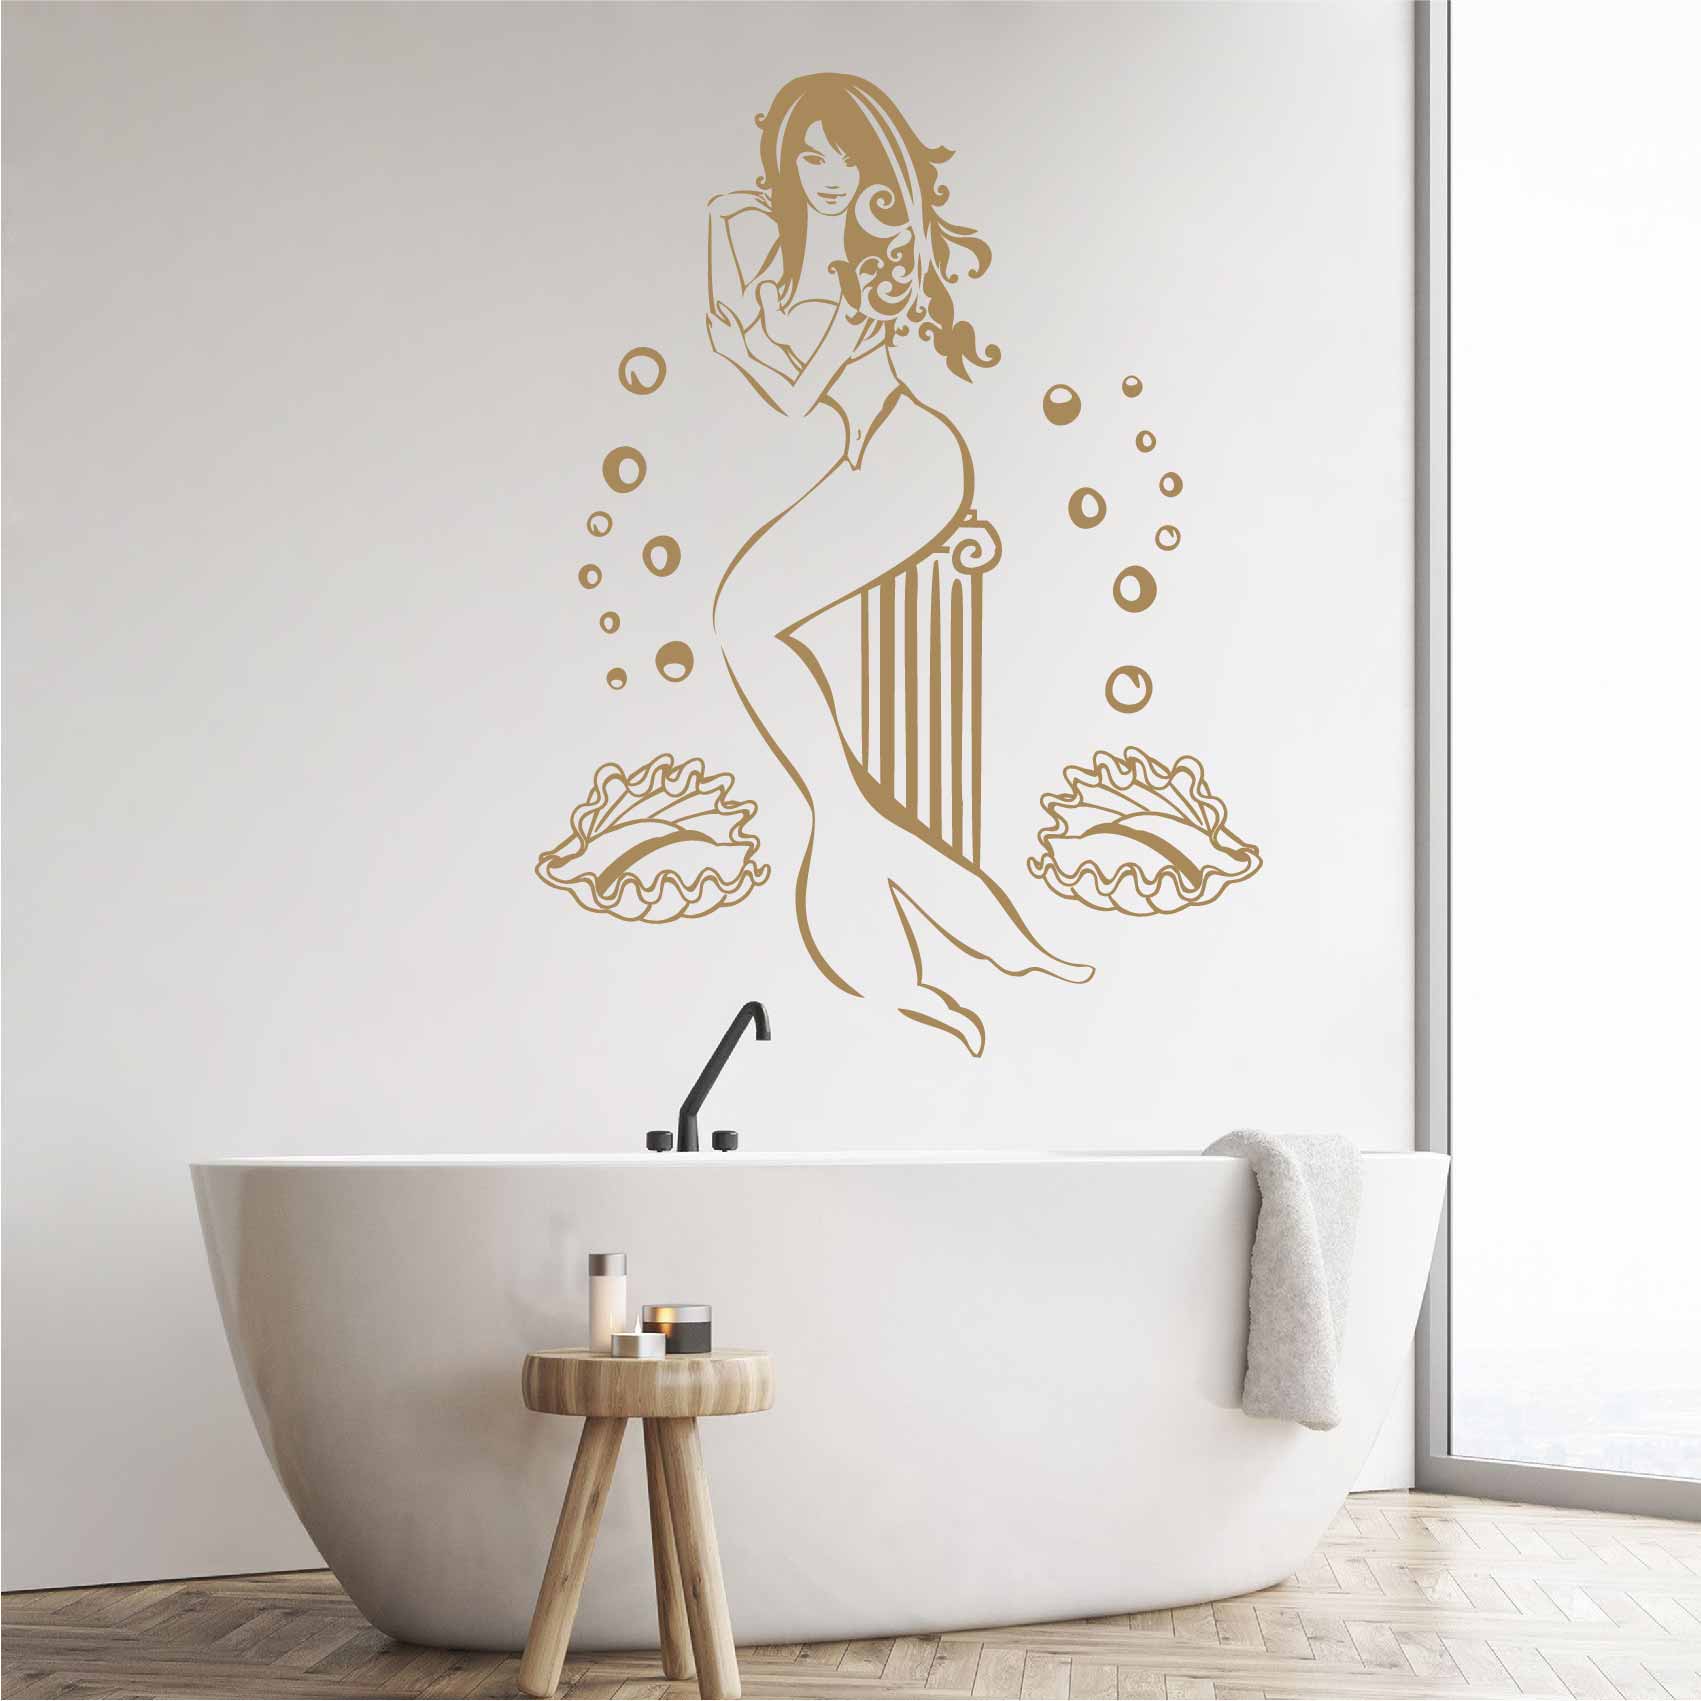 stickers-sirene-salle-de-bain-ref2diversfille-autocollant-muraux-deco-douche-baignoire-femme-fille-sticker-mural